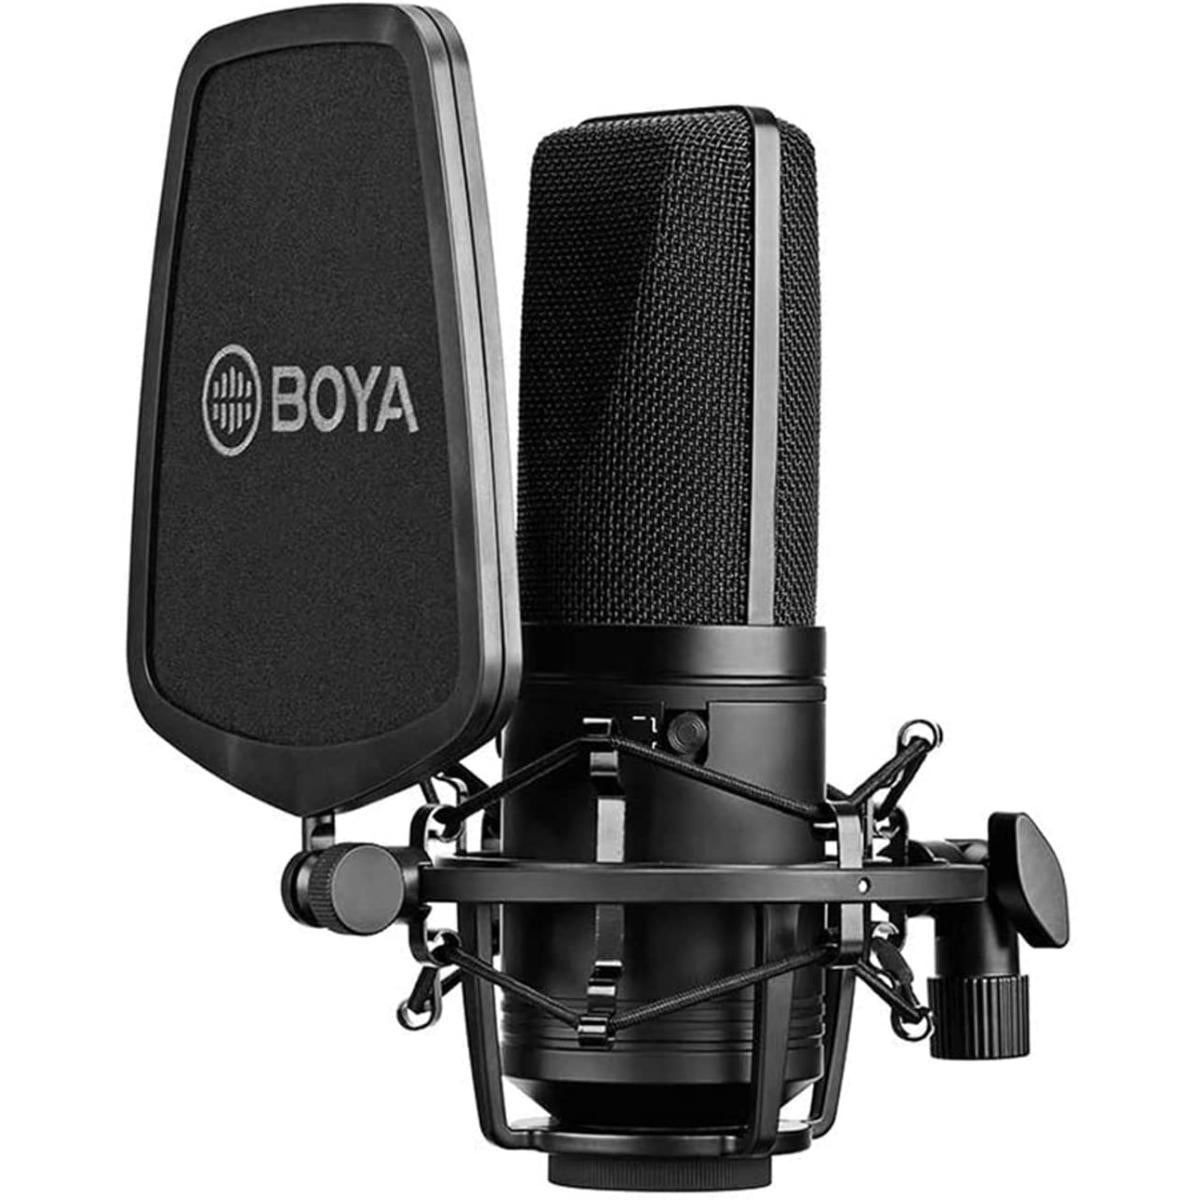 BOYA Large Diaphragm Condenser Microphone - Black